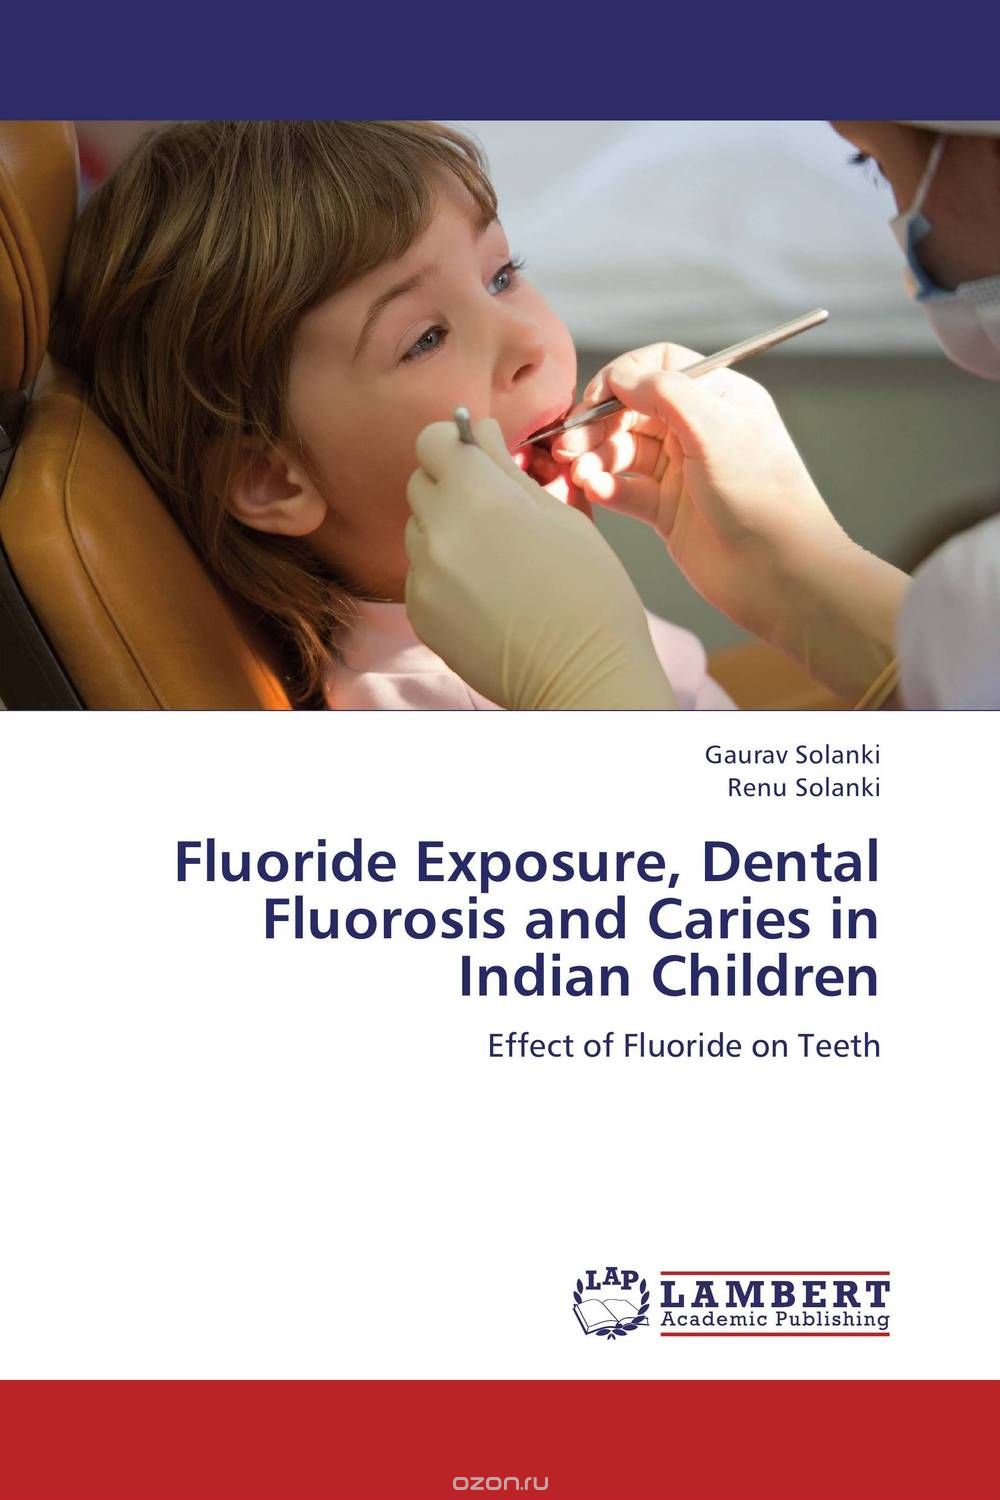 Скачать книгу "Fluoride Exposure, Dental Fluorosis and Caries in Indian Children"